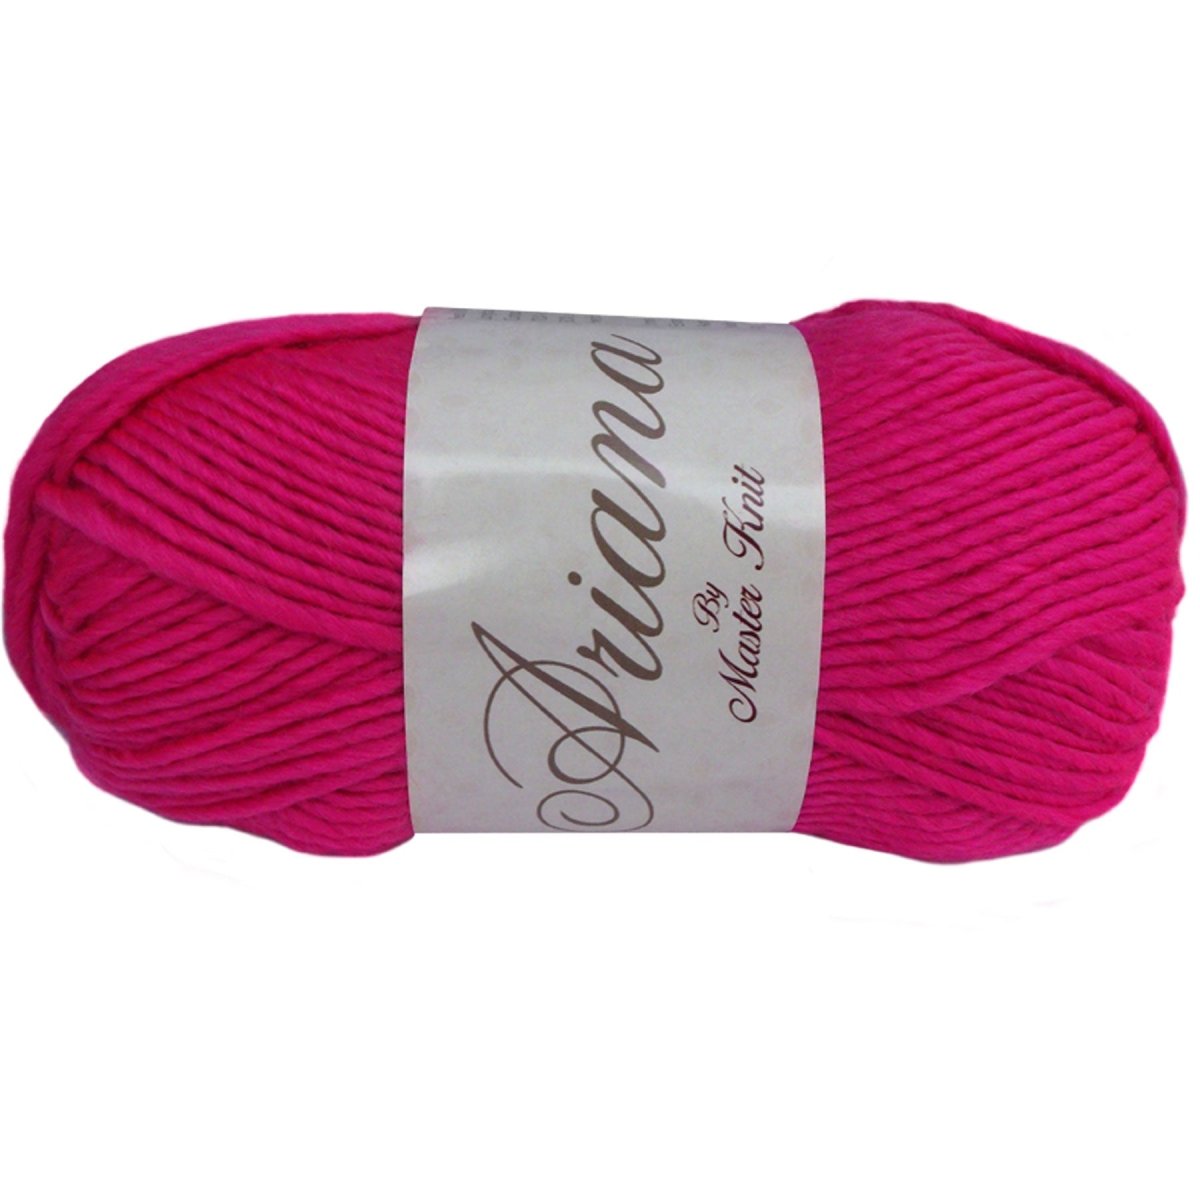 ARIANA - Aran - Crochetstores9510-243